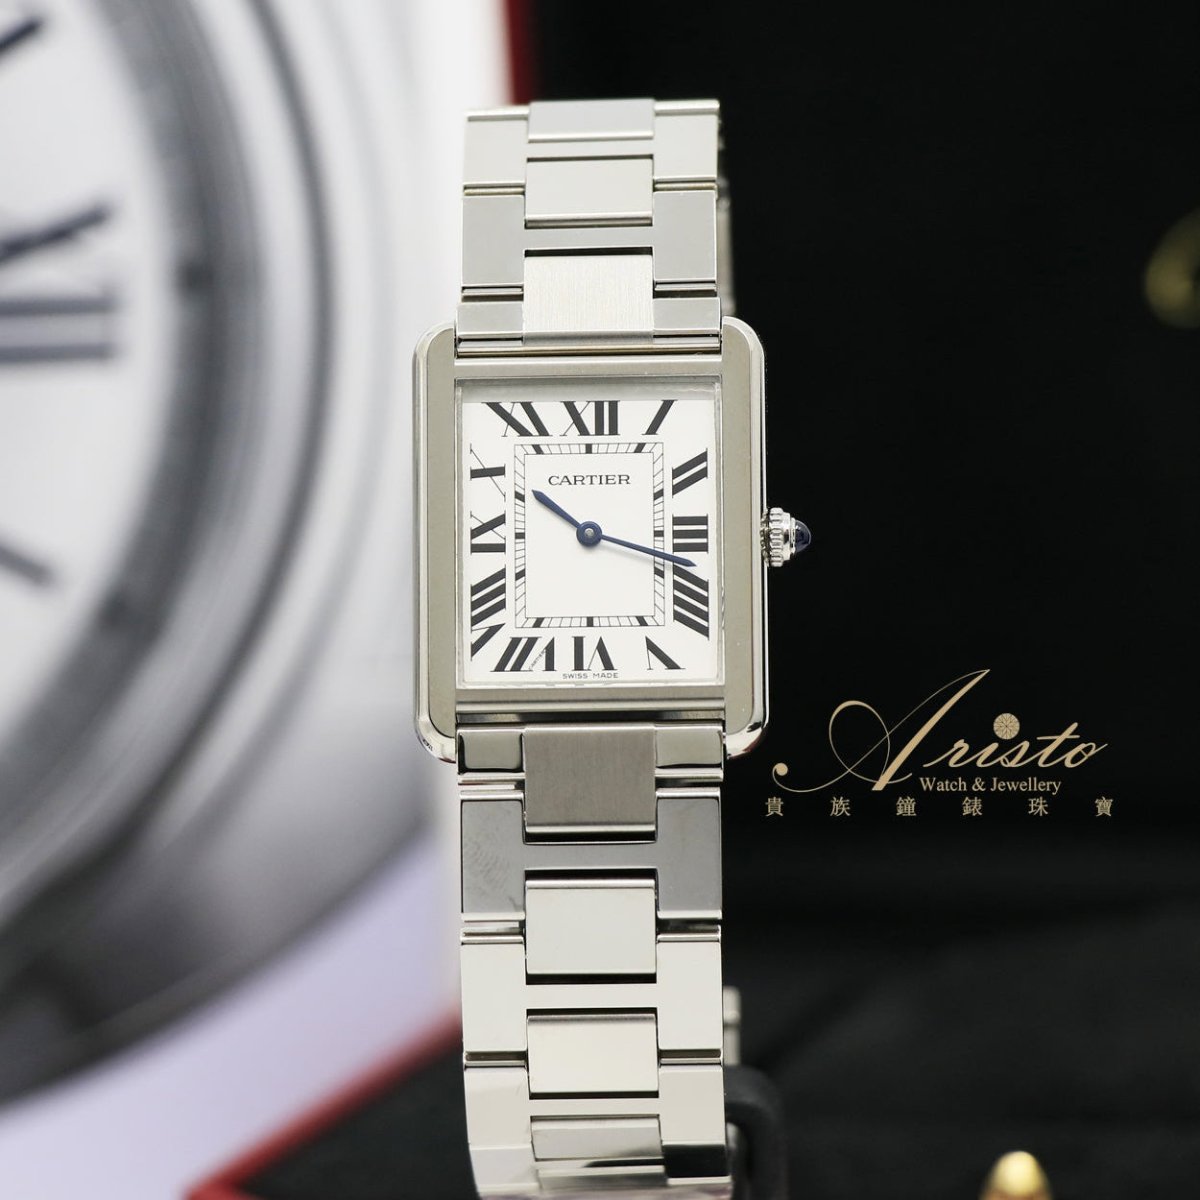 Cartier W5200014 Watches- Aristo Watch & Jewellery